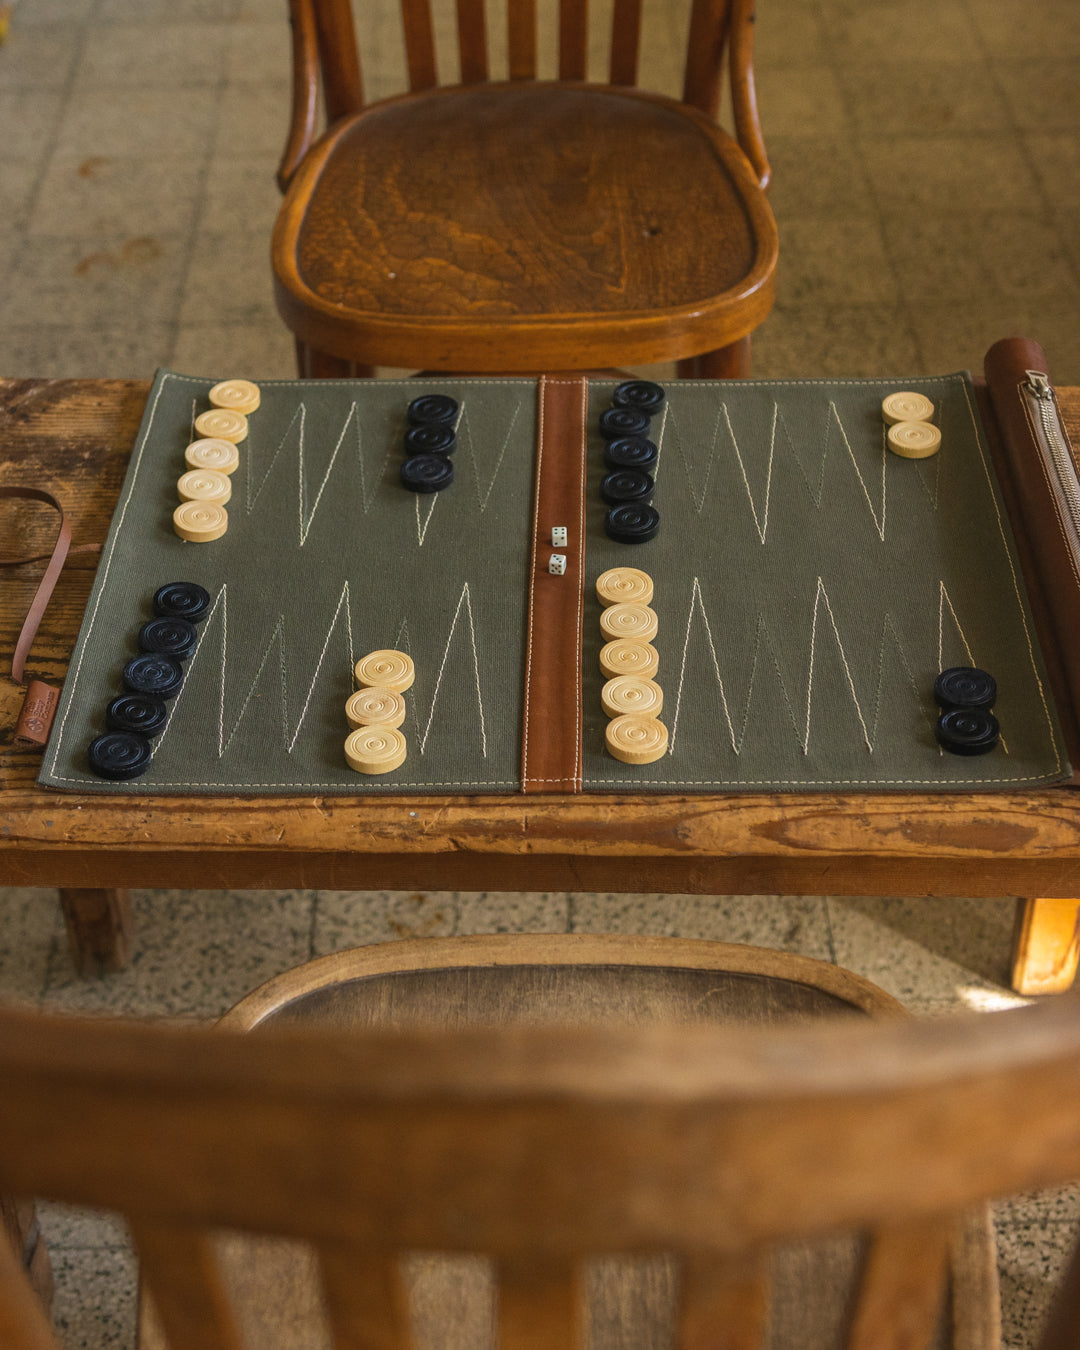 The Backgammon